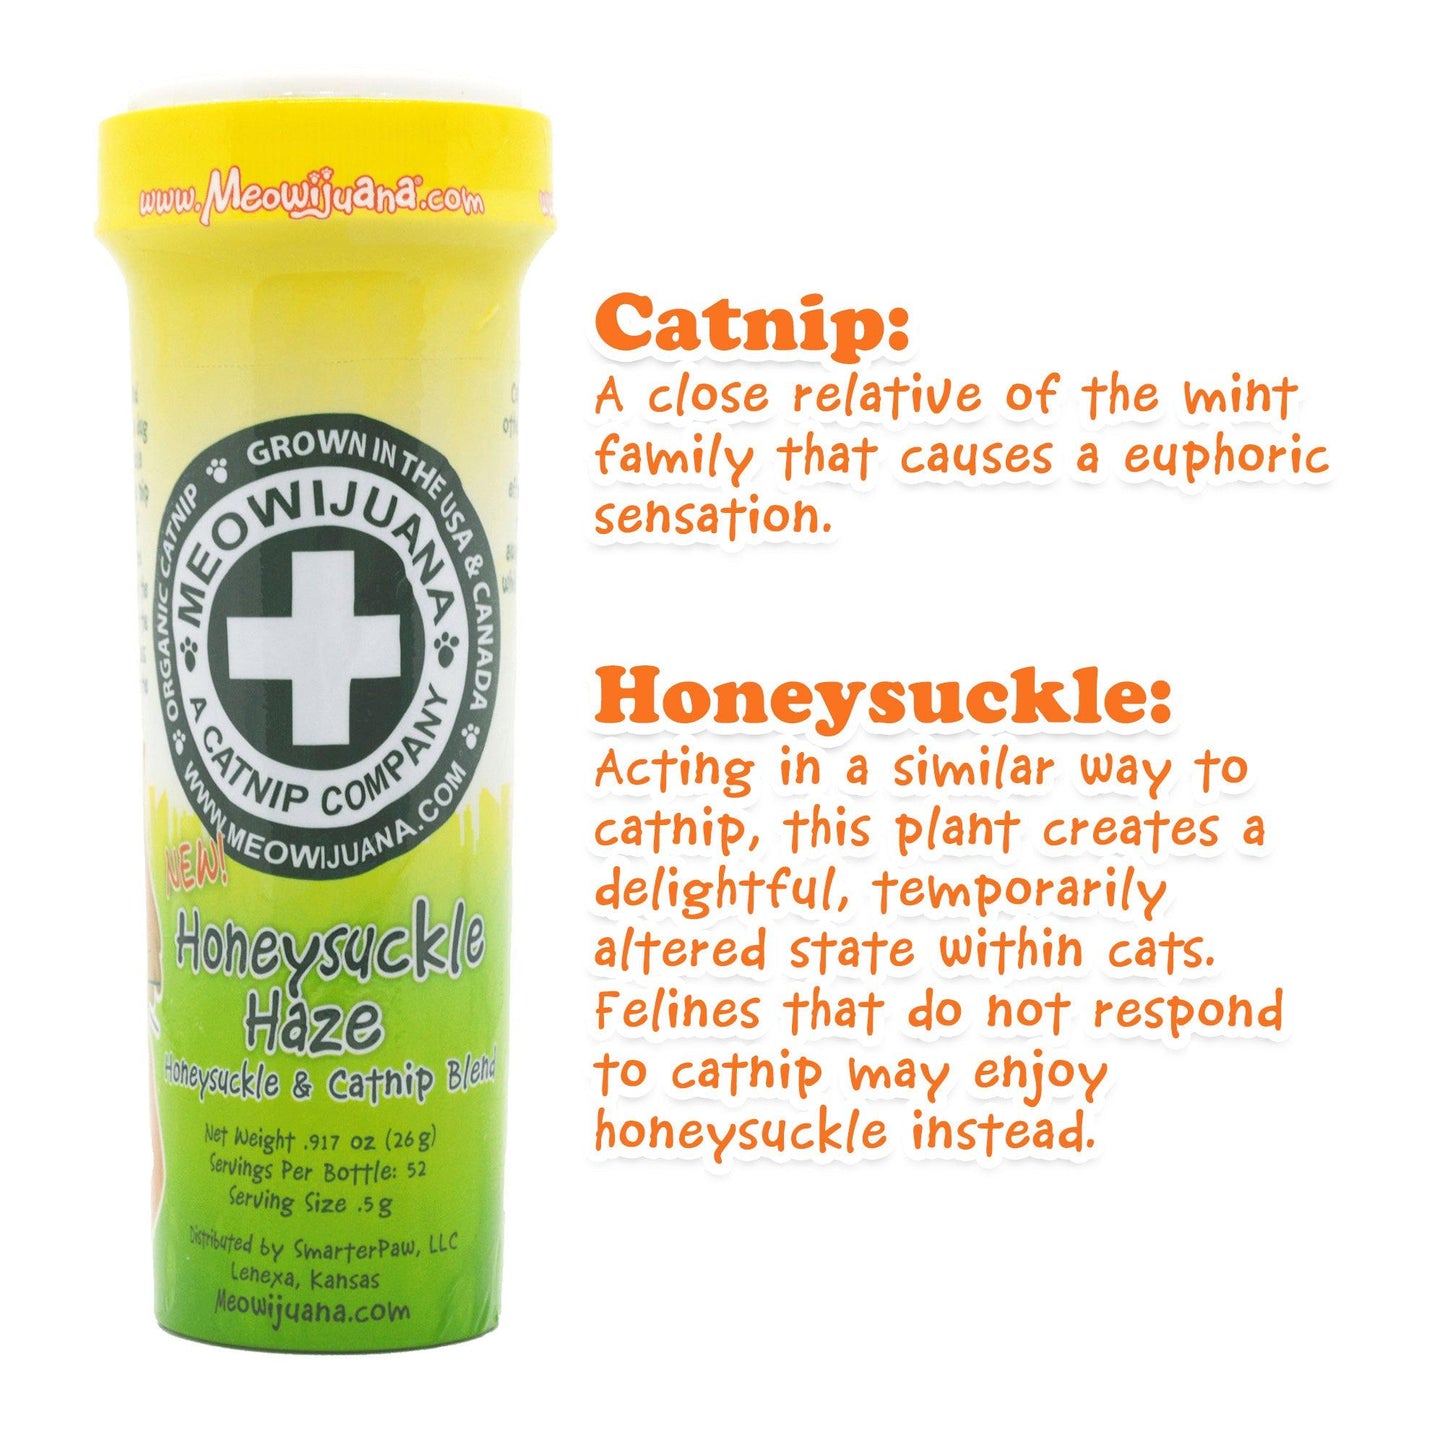 Honeysuckle Haze - Honeysuckle & Catnip Blend